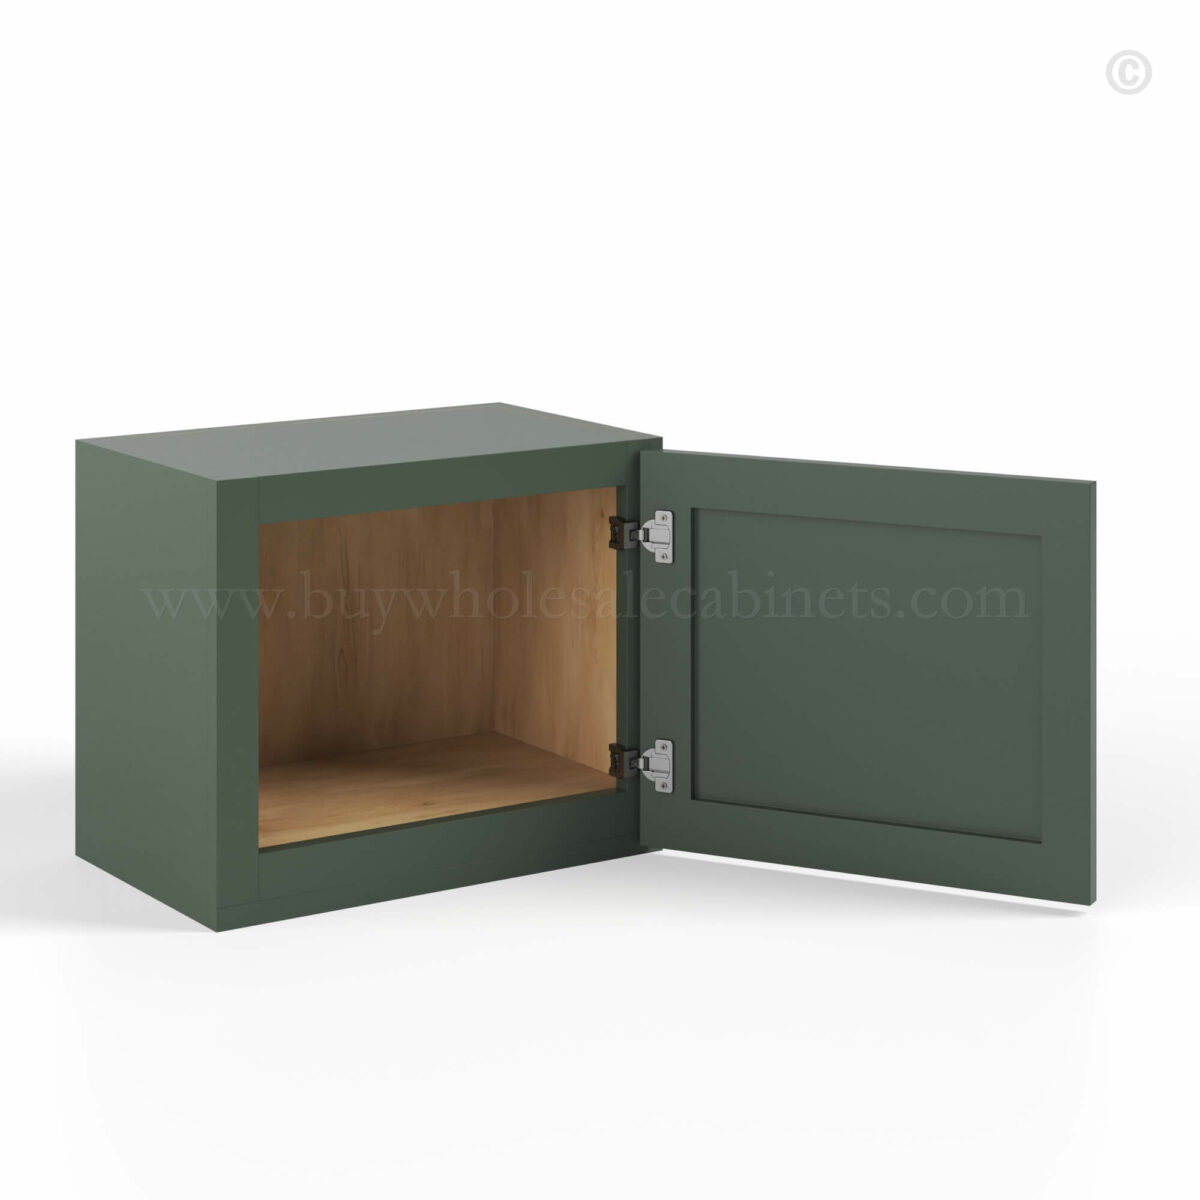 Slim Shaker Green Single Door Wall Cabinet, rta cabinets, wholesale cabinets